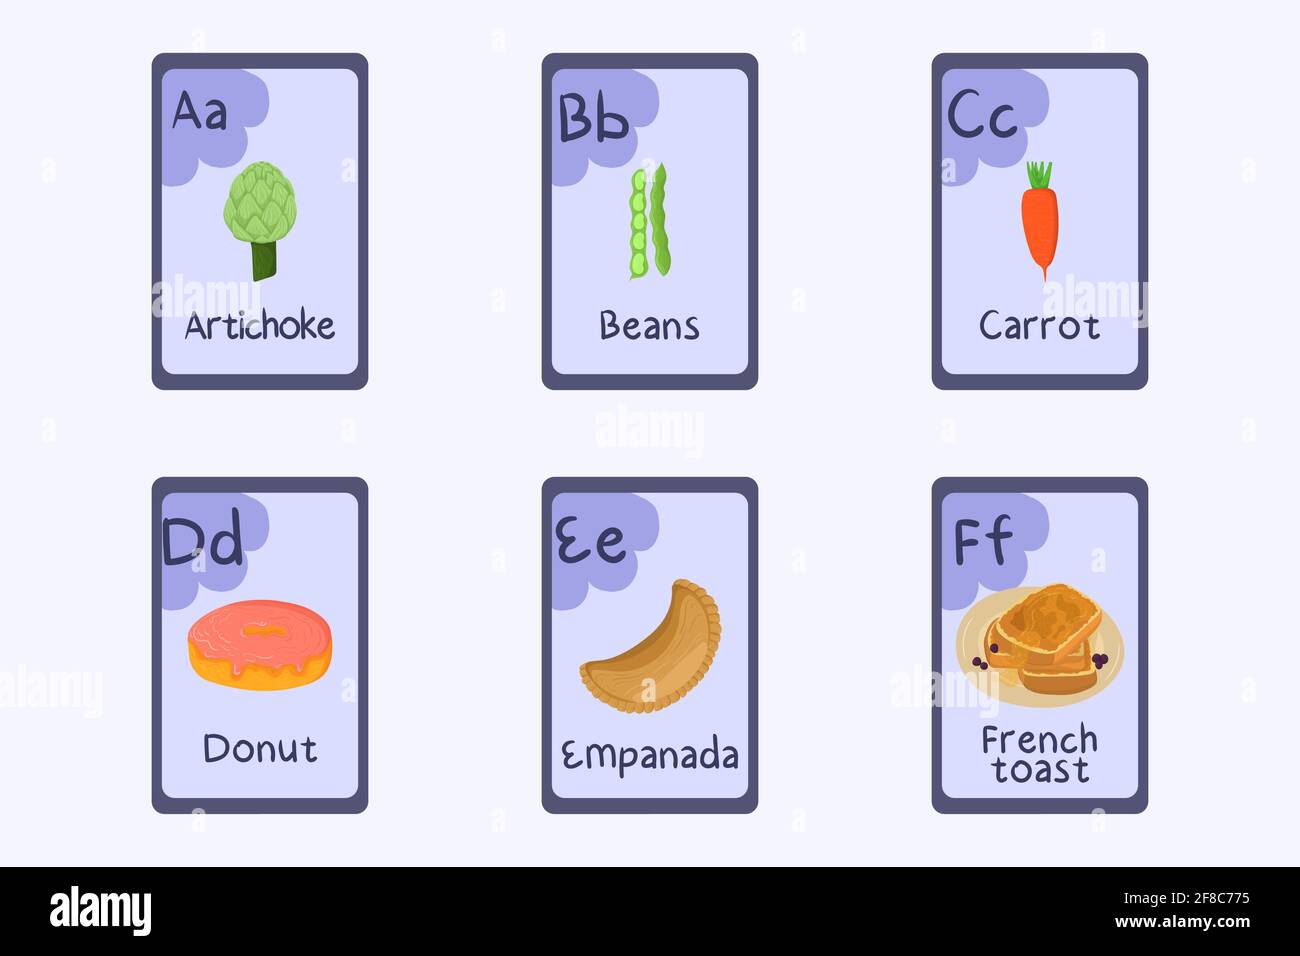 Bunte Alphabet Flashcard Buchstaben A, B, C, D, E, F - Artischocke, Bohnen, Karotte, Donut, Empanada, french Toast. Stock Vektor